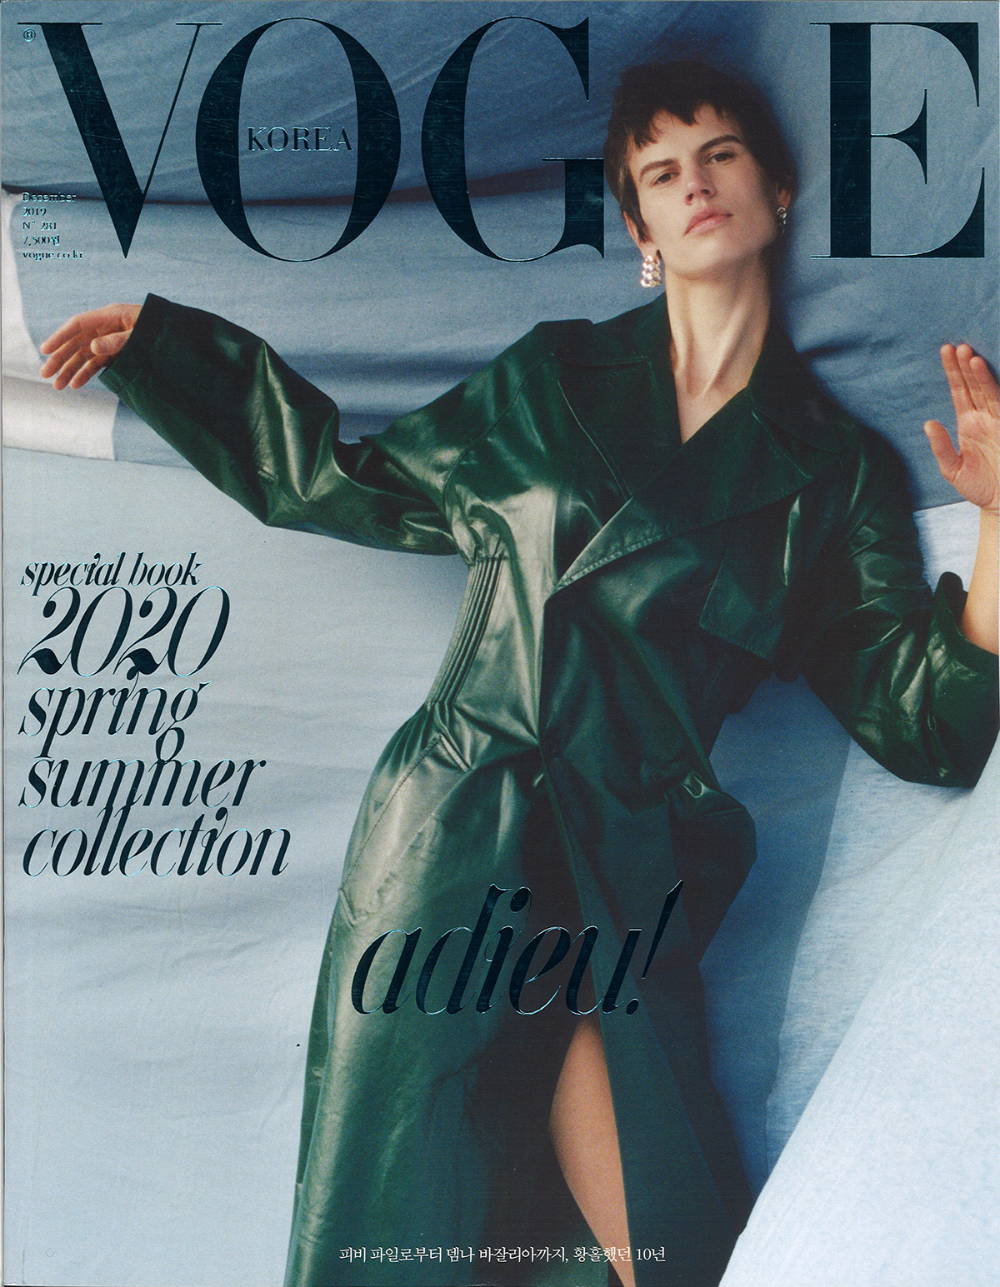 Vogue Korea using Lingerie Typeface with Gigi Hadid